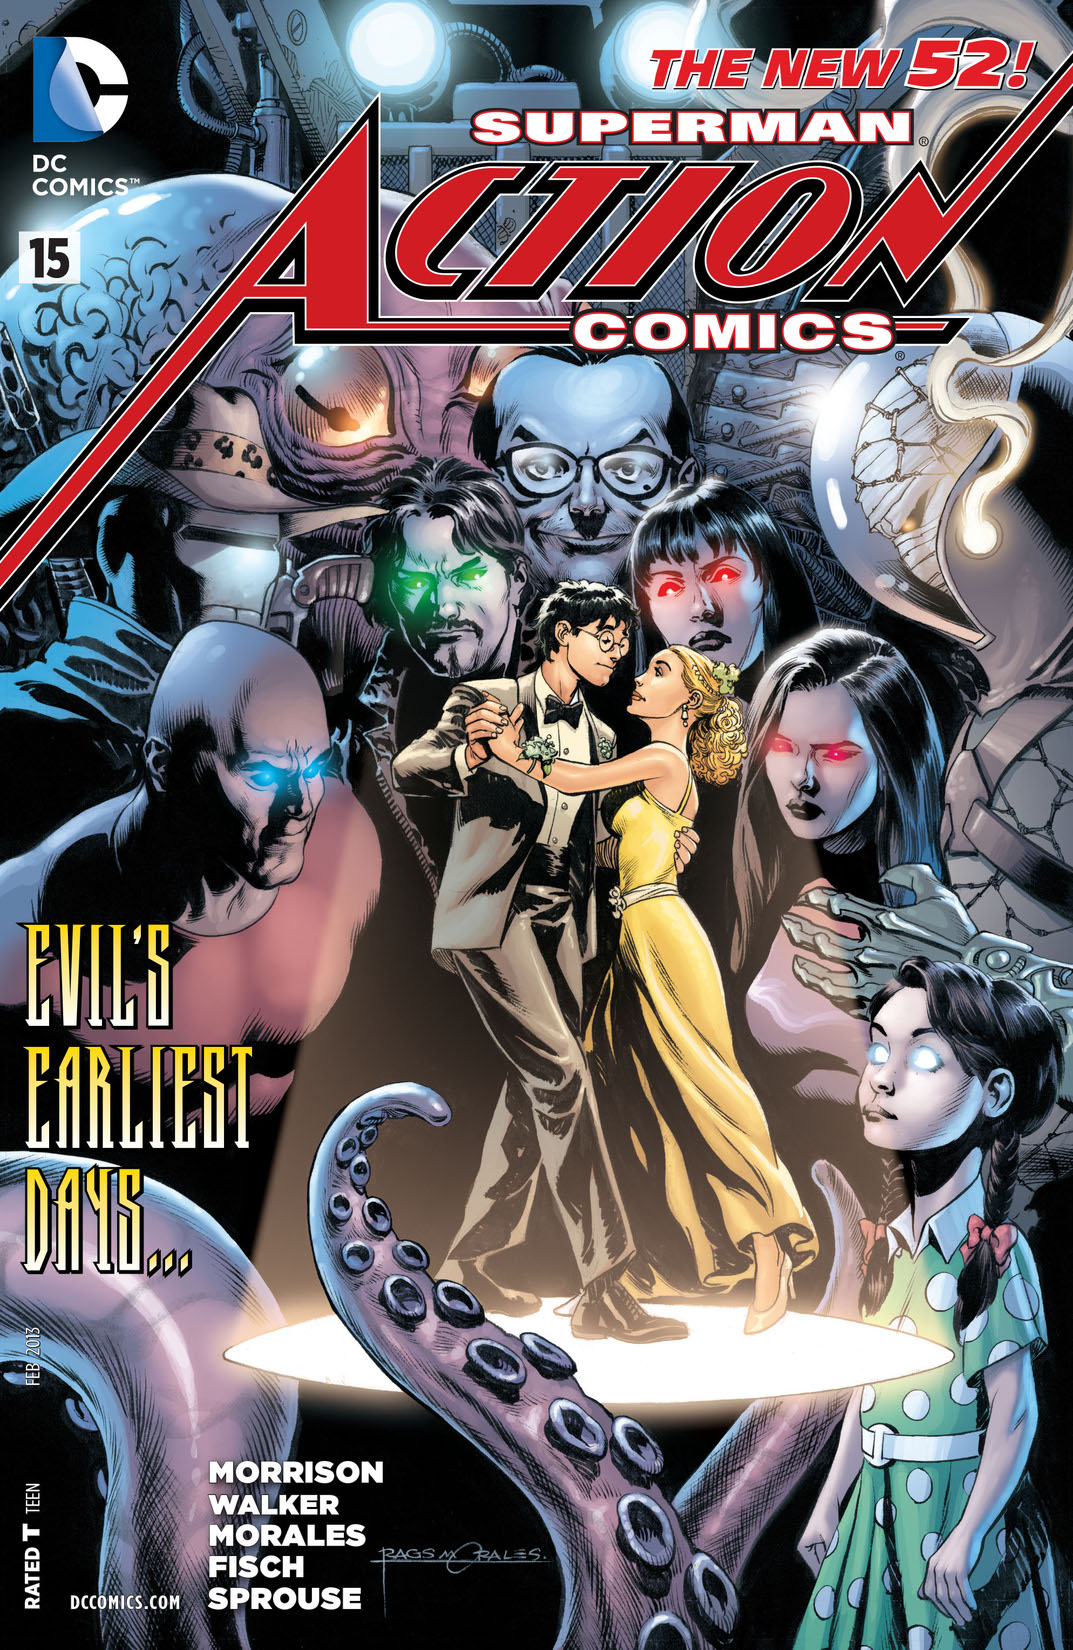 Action Comics (2011-) #15 preview images